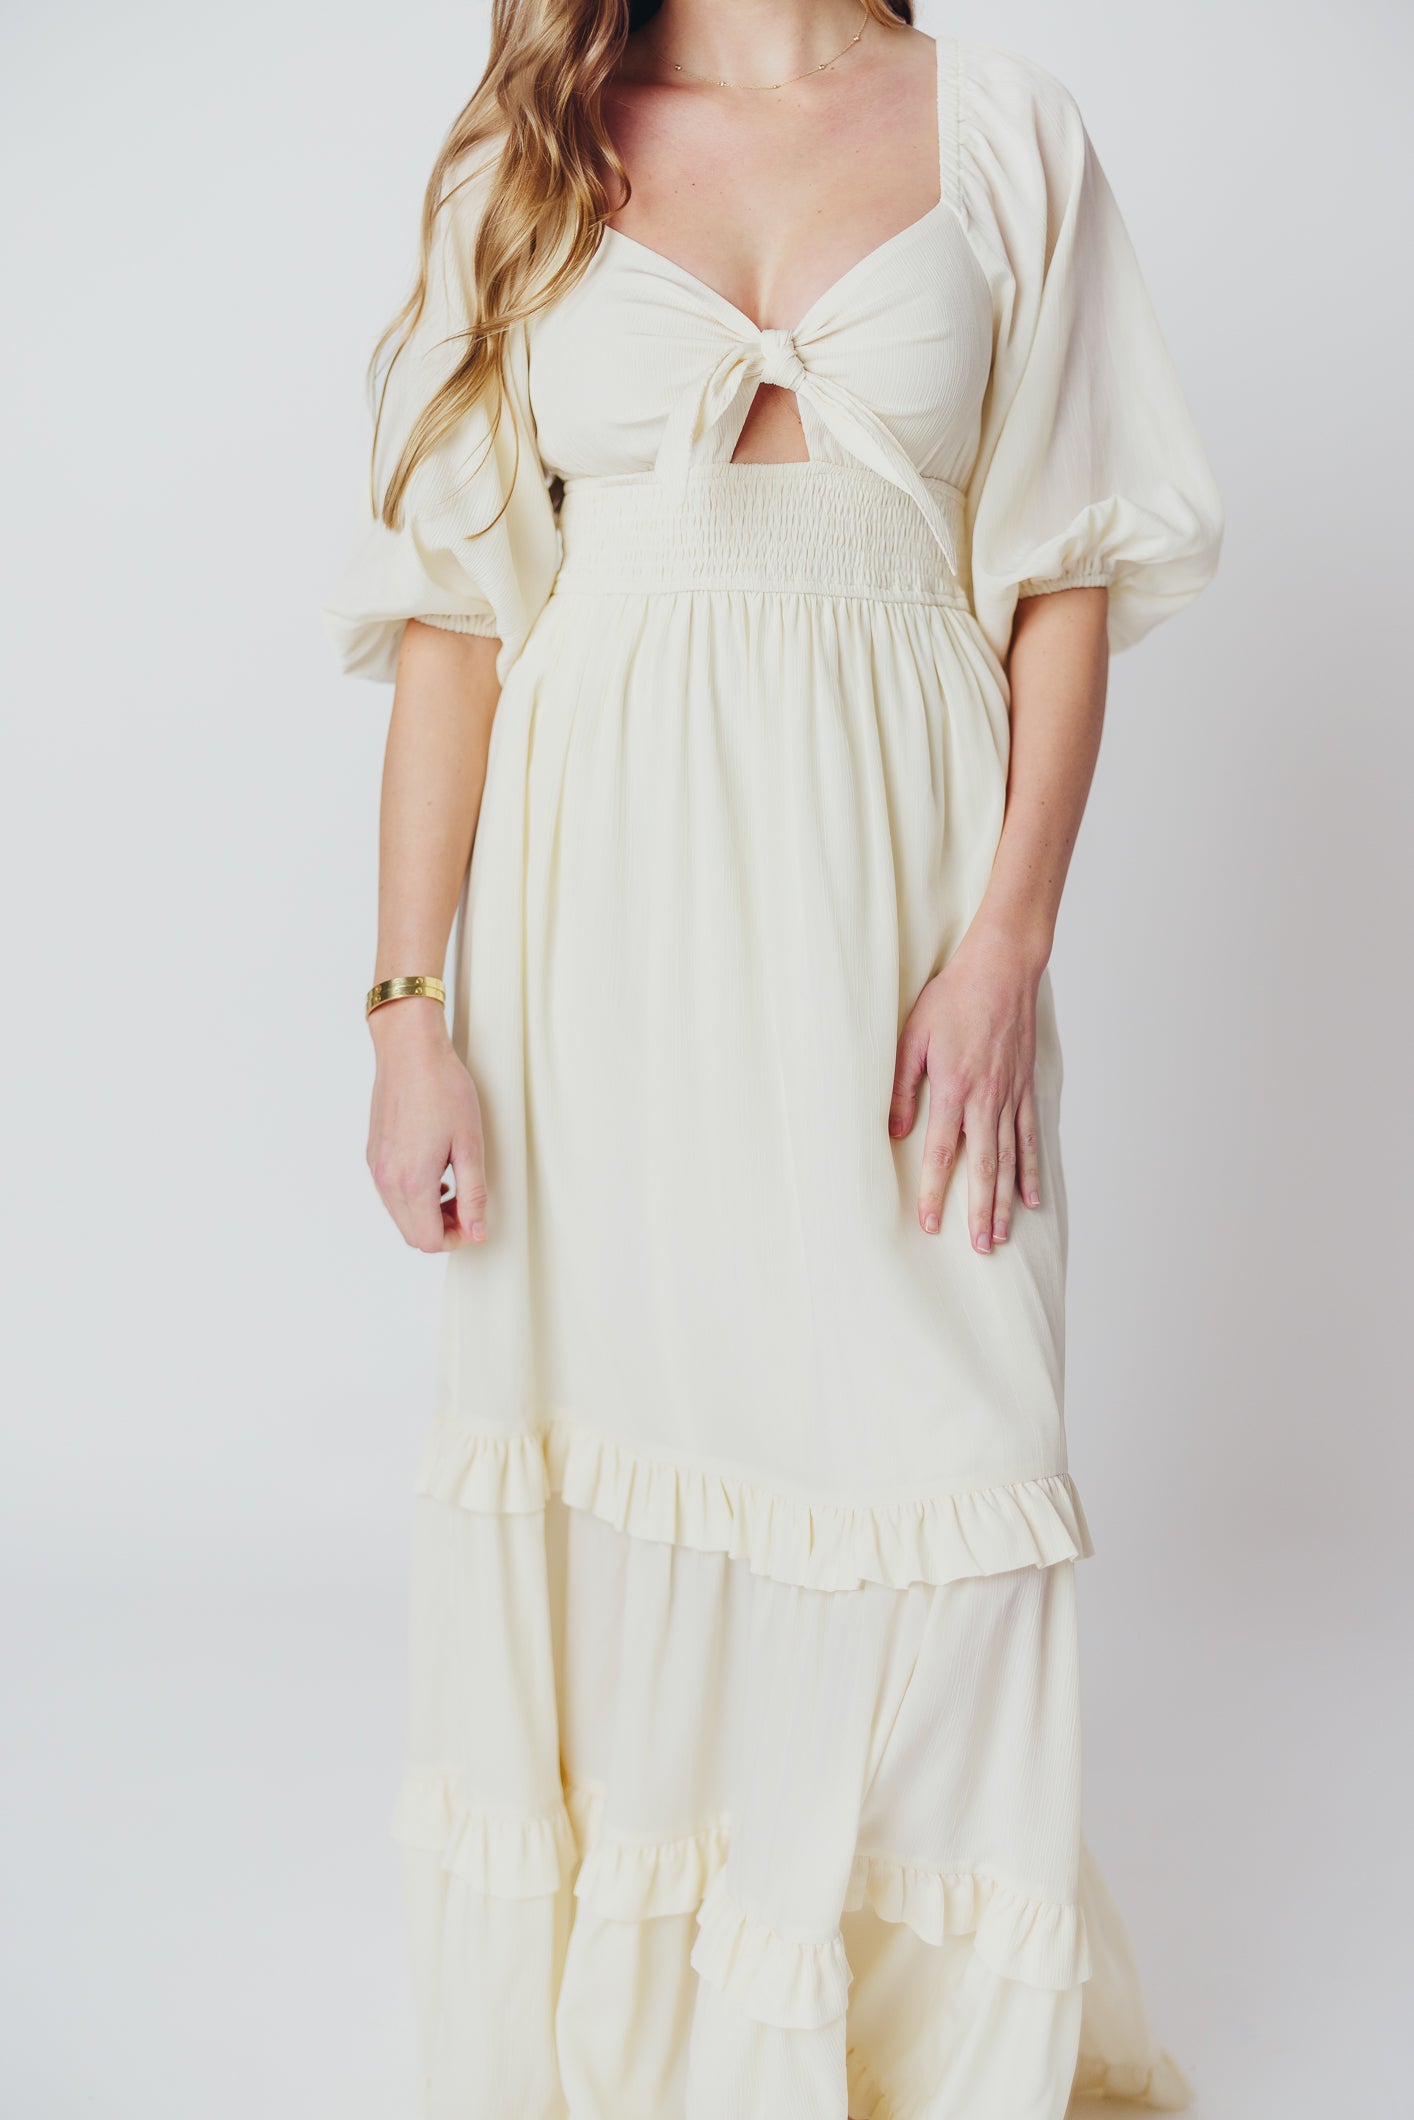 Eleanor Ruffle Detail Maxi Dress in Cream - Bump Friendly & Inclusive Sizing (S-3XL)